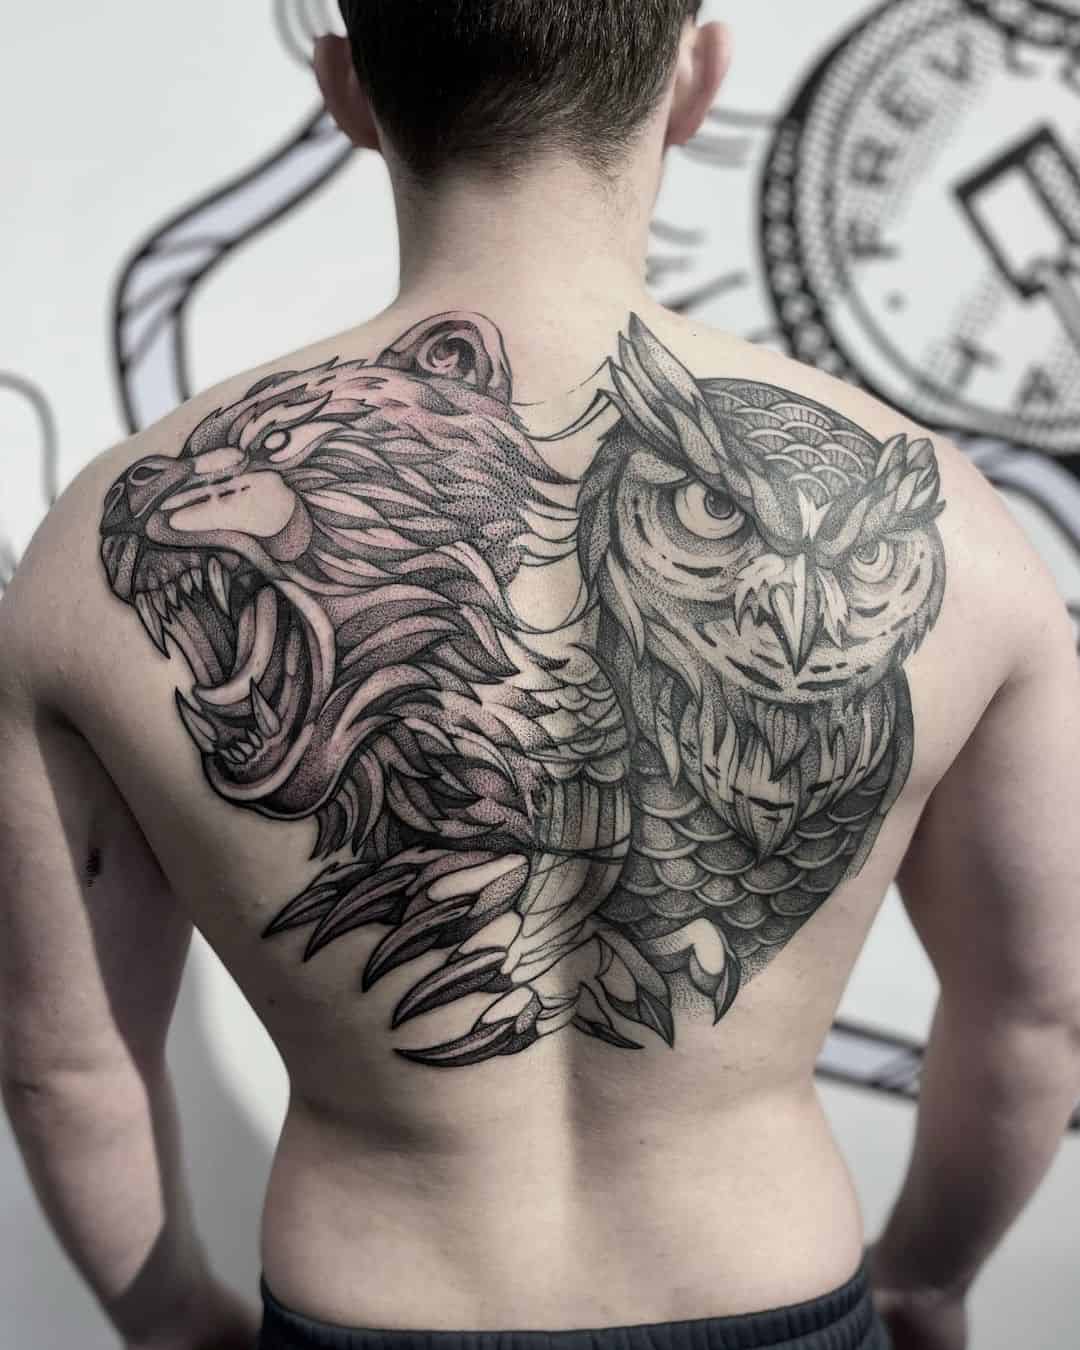 Owl on back tattoo by zrick tattoo